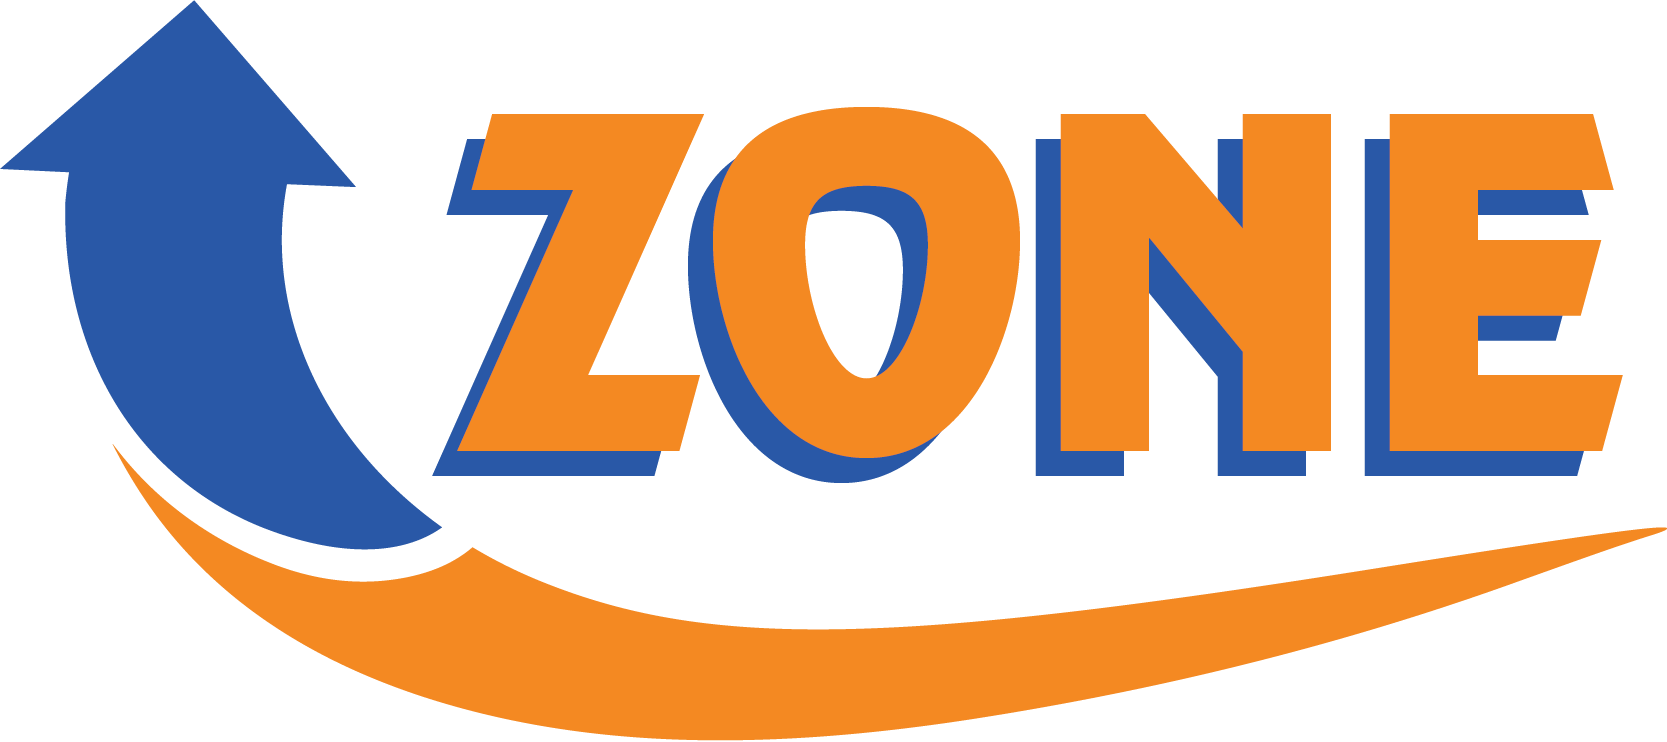 ZONE logo in orange and blue